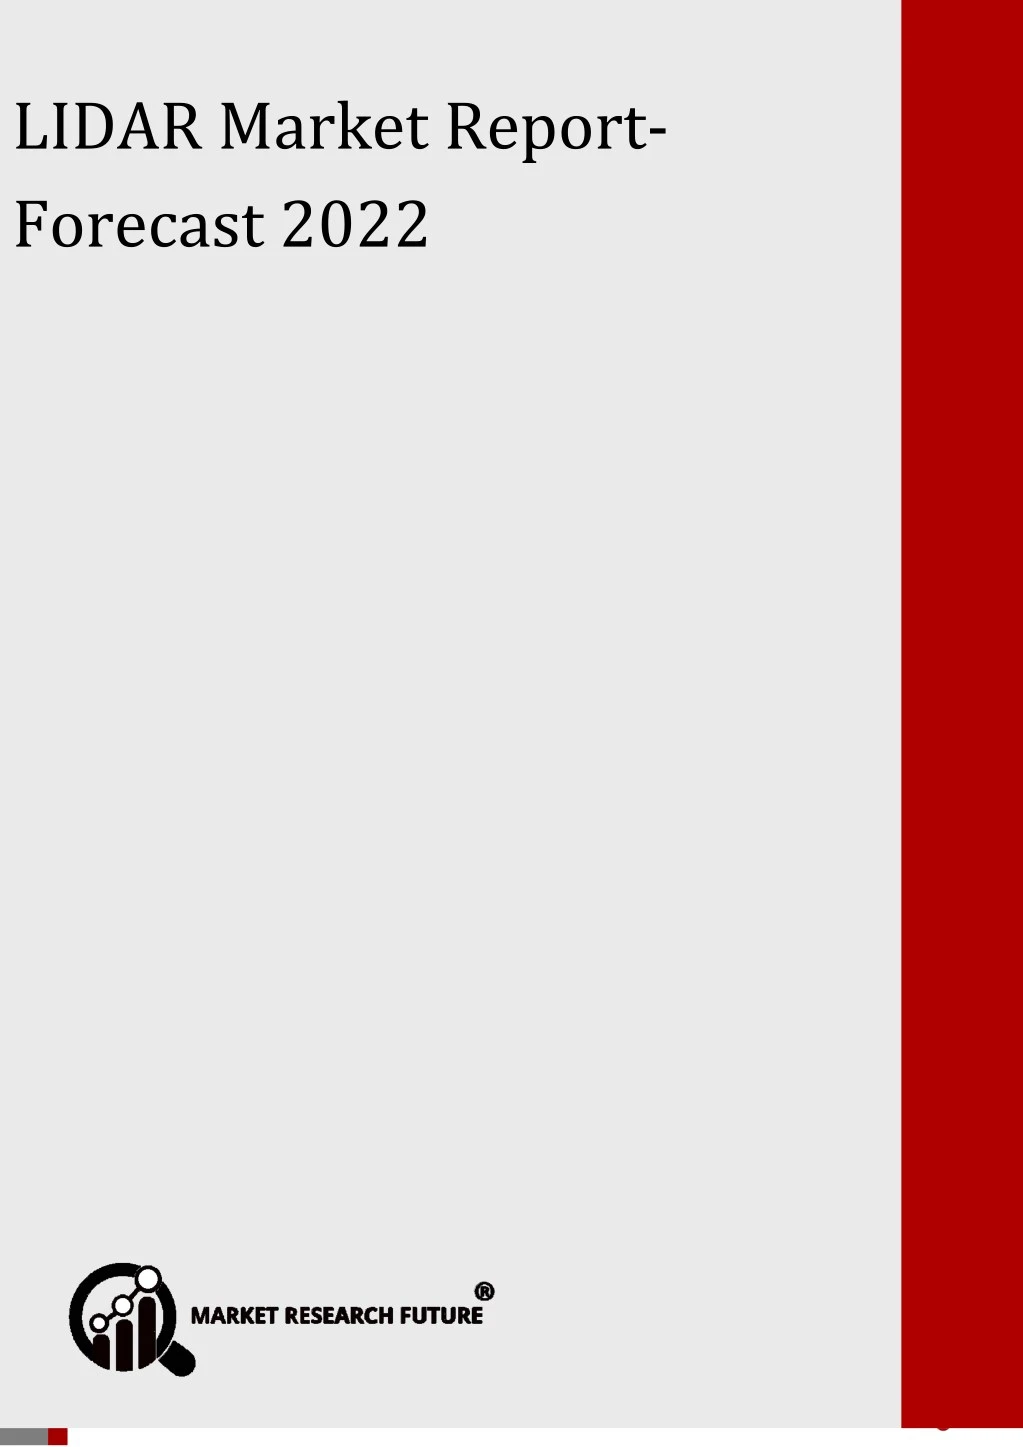 lidar market report forecast 2022 lidar market